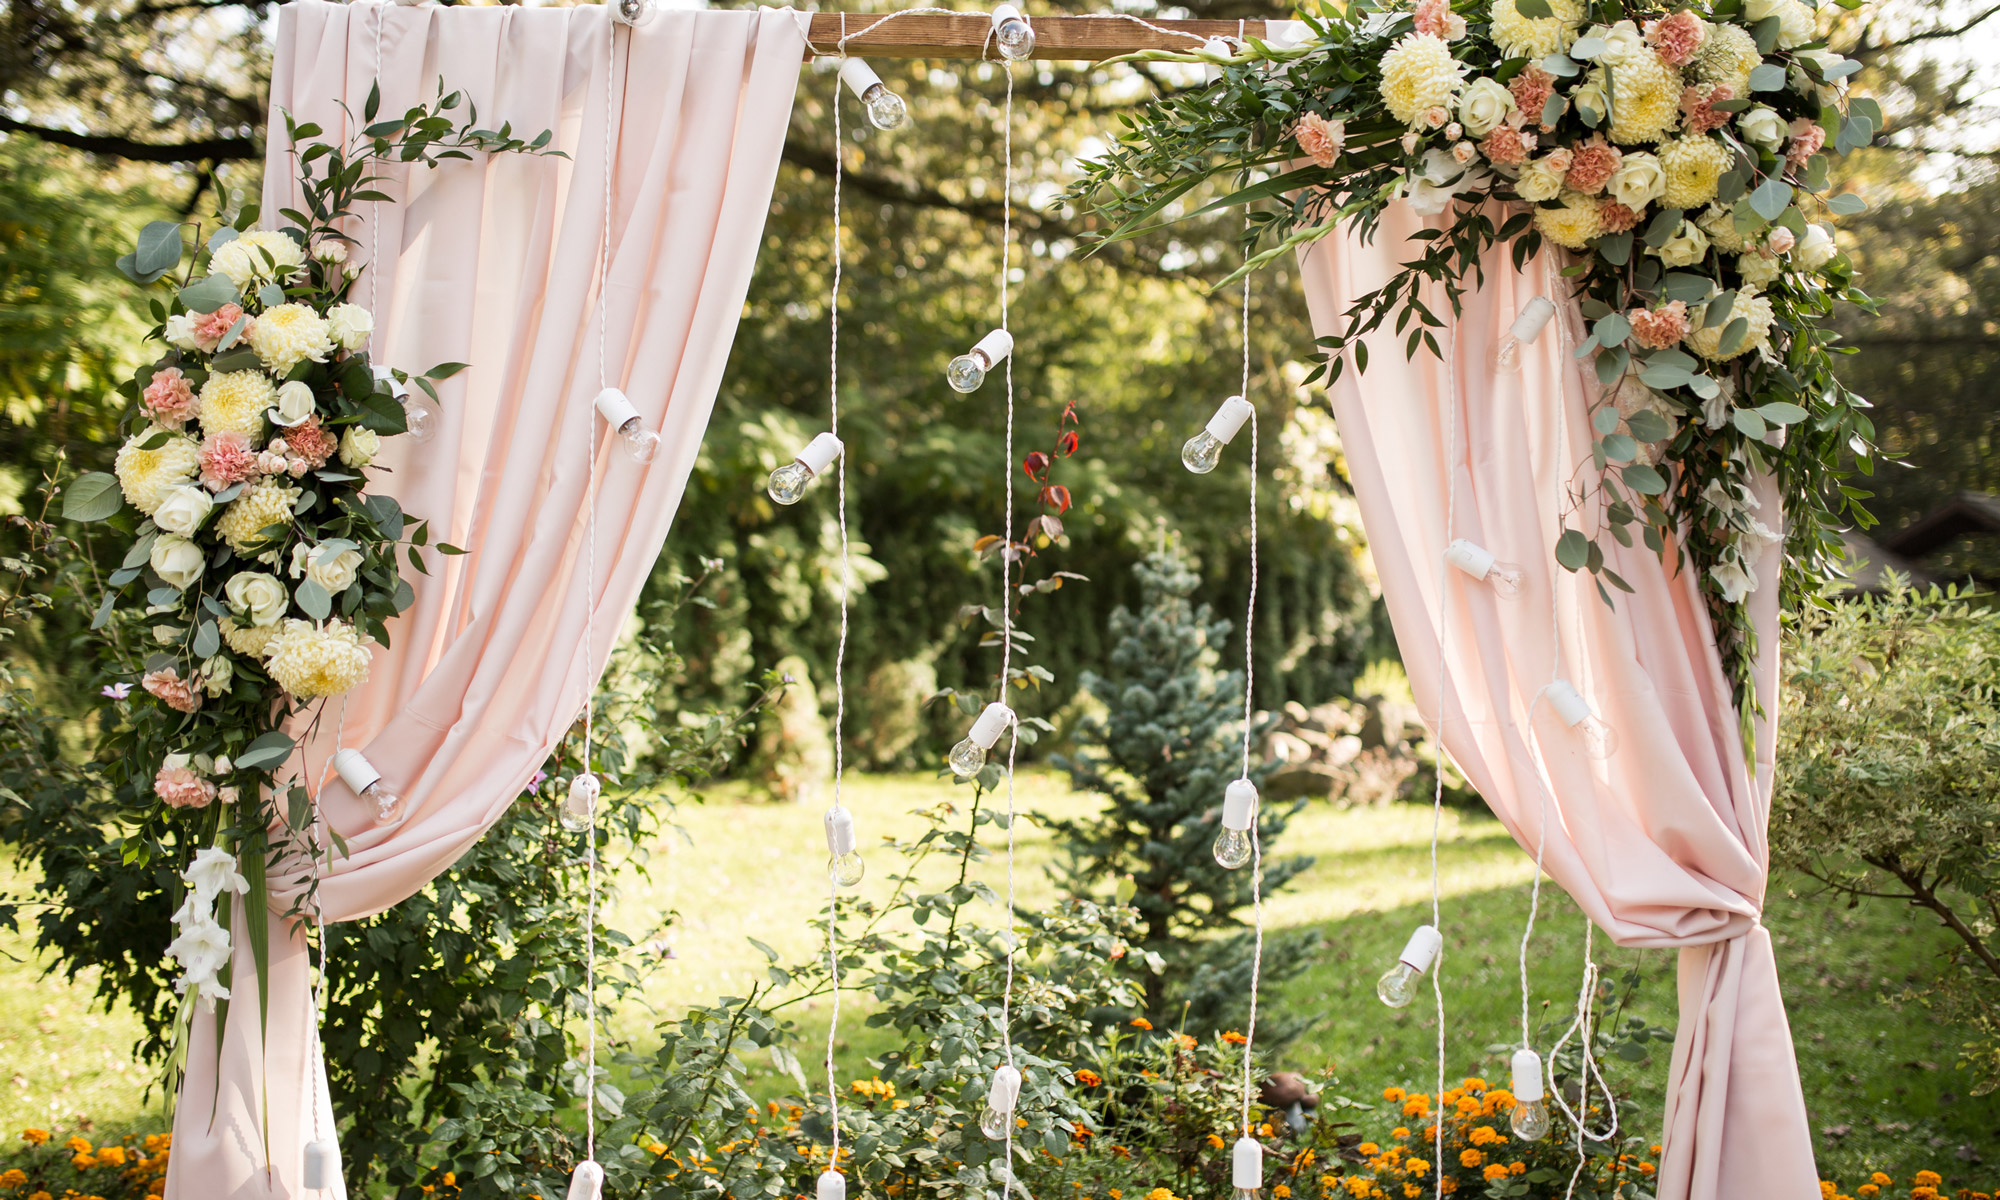 Garden Wedding Decoration Ideas for Your Backyard Reception